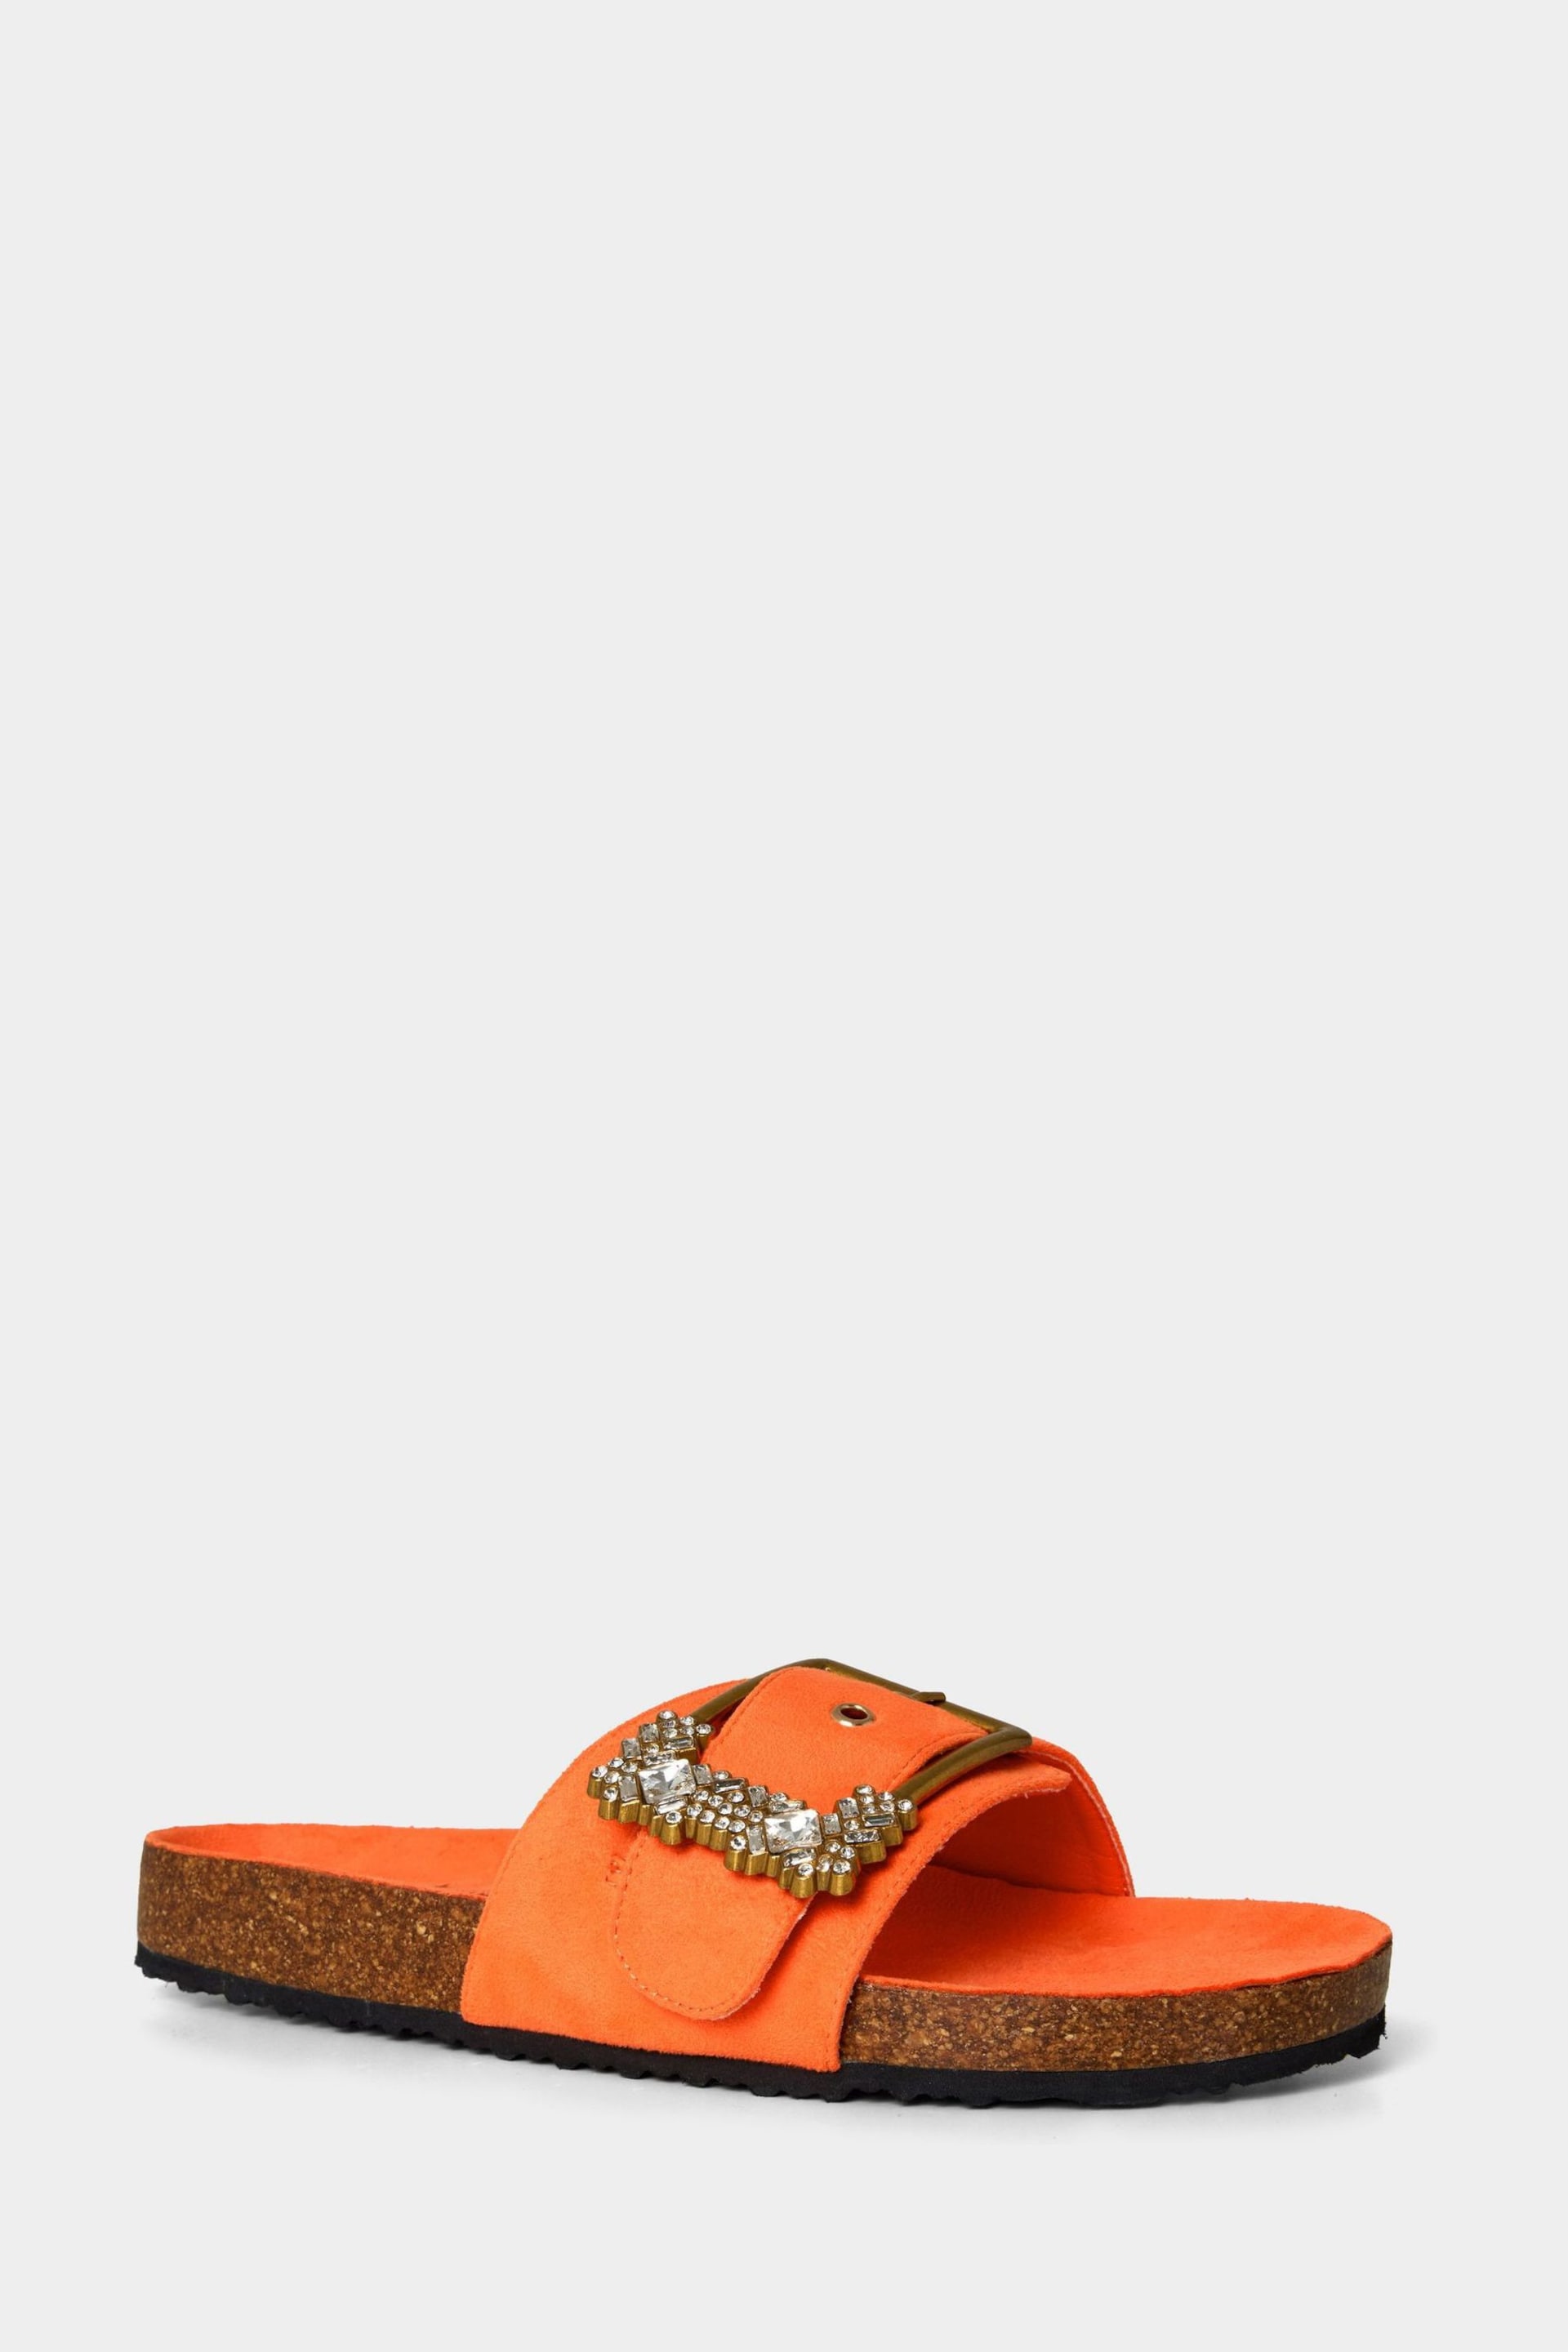 Joe Browns Orange Crystal Buckle Slider Sandals - Image 2 of 4